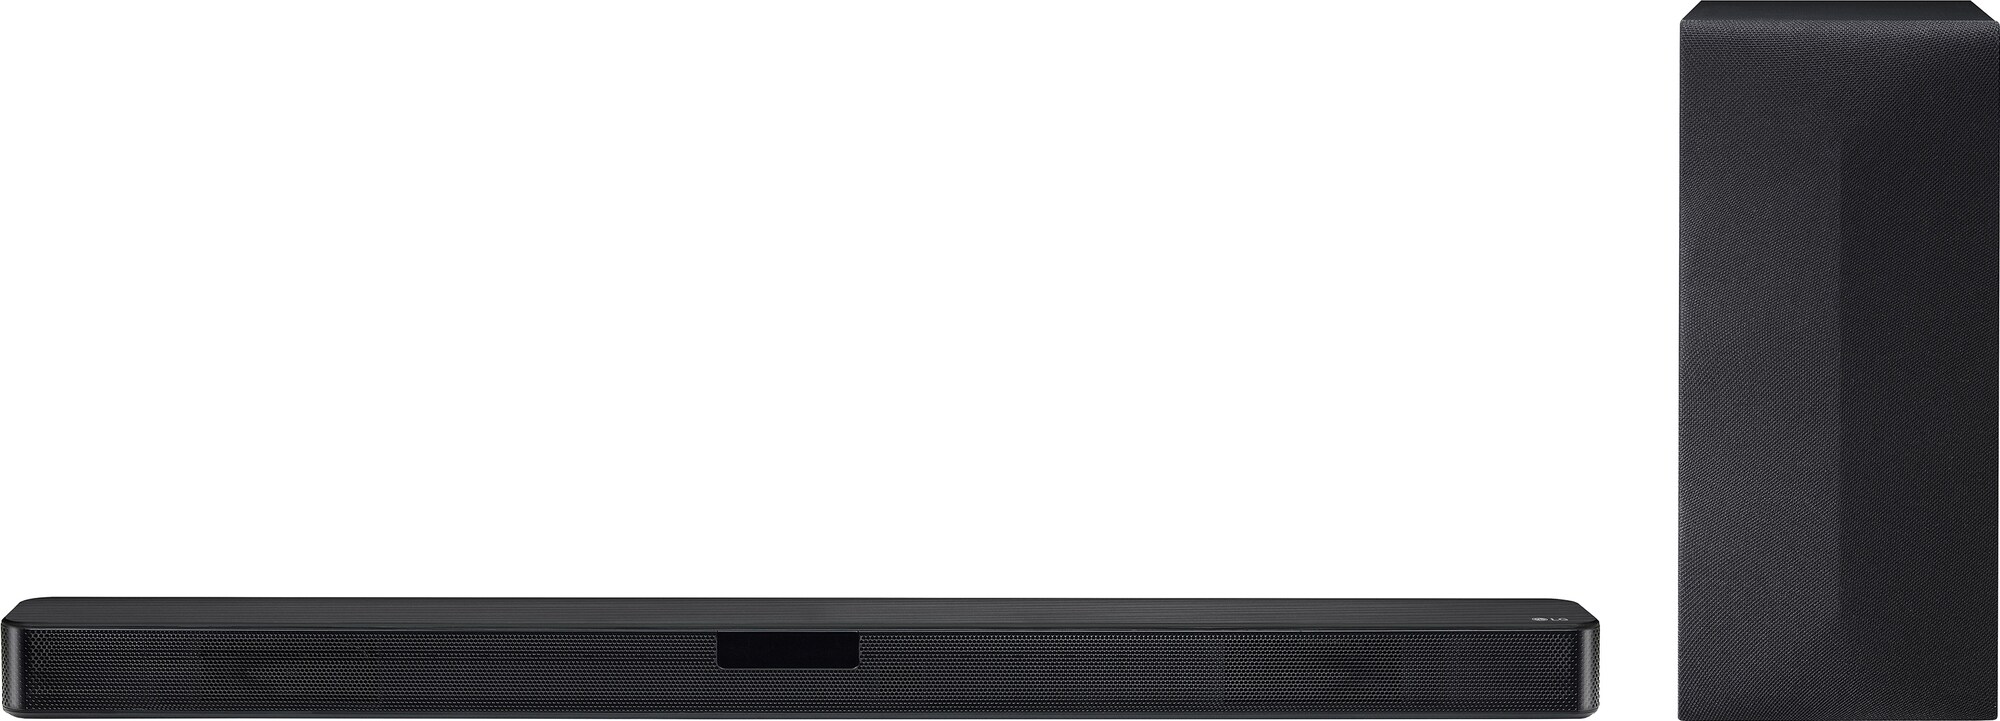 LG SN4 2.1 kanals soundbar med trådløs wireless subwoofer | Elgiganten